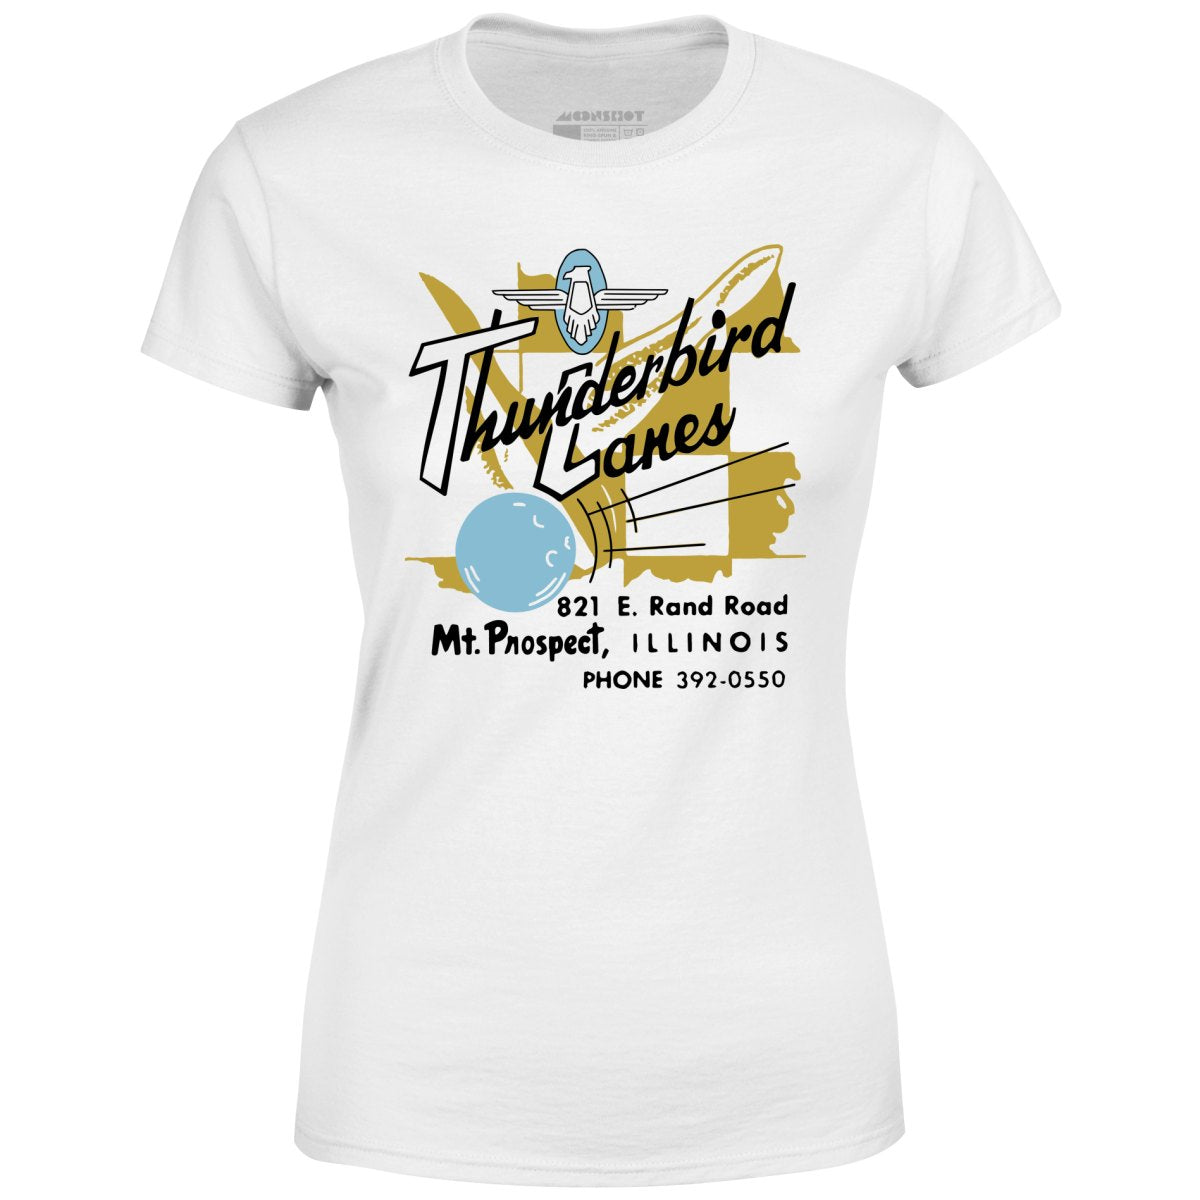 Thunderbird Lanes - Mt. Prospect, IL - Vintage Bowling Alley - Women's T-Shirt